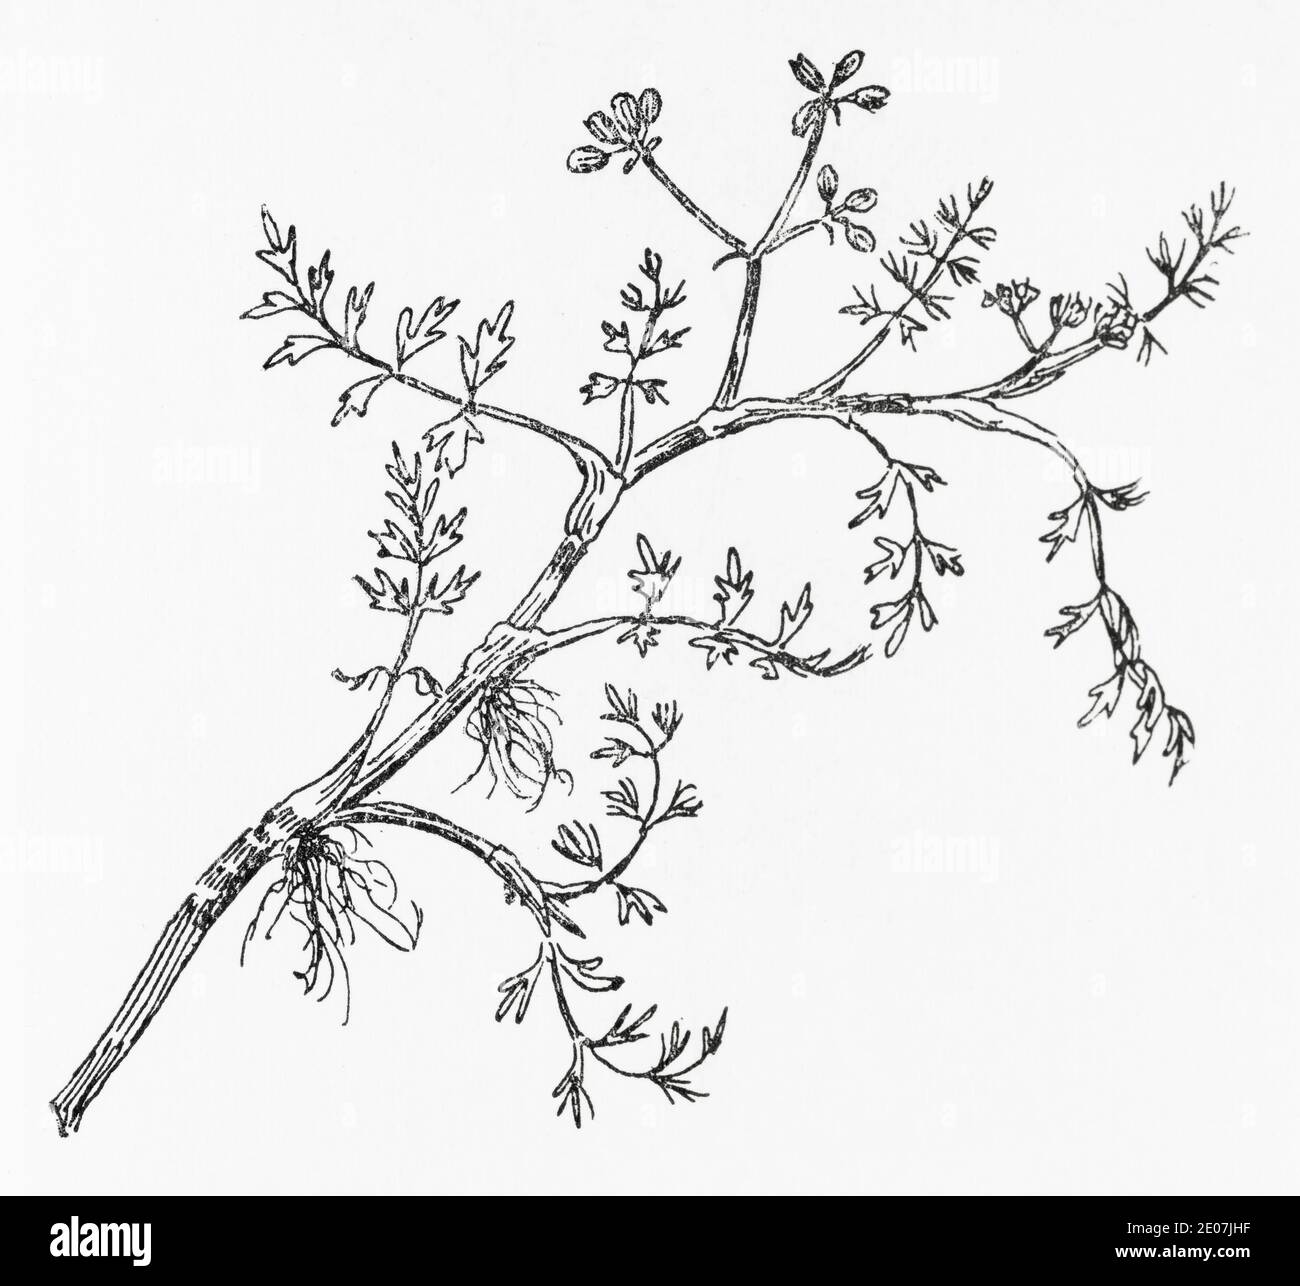 Old botanical illustration engraving of Water Parsnip, Submerged Water Parsnip / Apium inundatum. Drawings of British umbellifers. See Notes Stock Photo